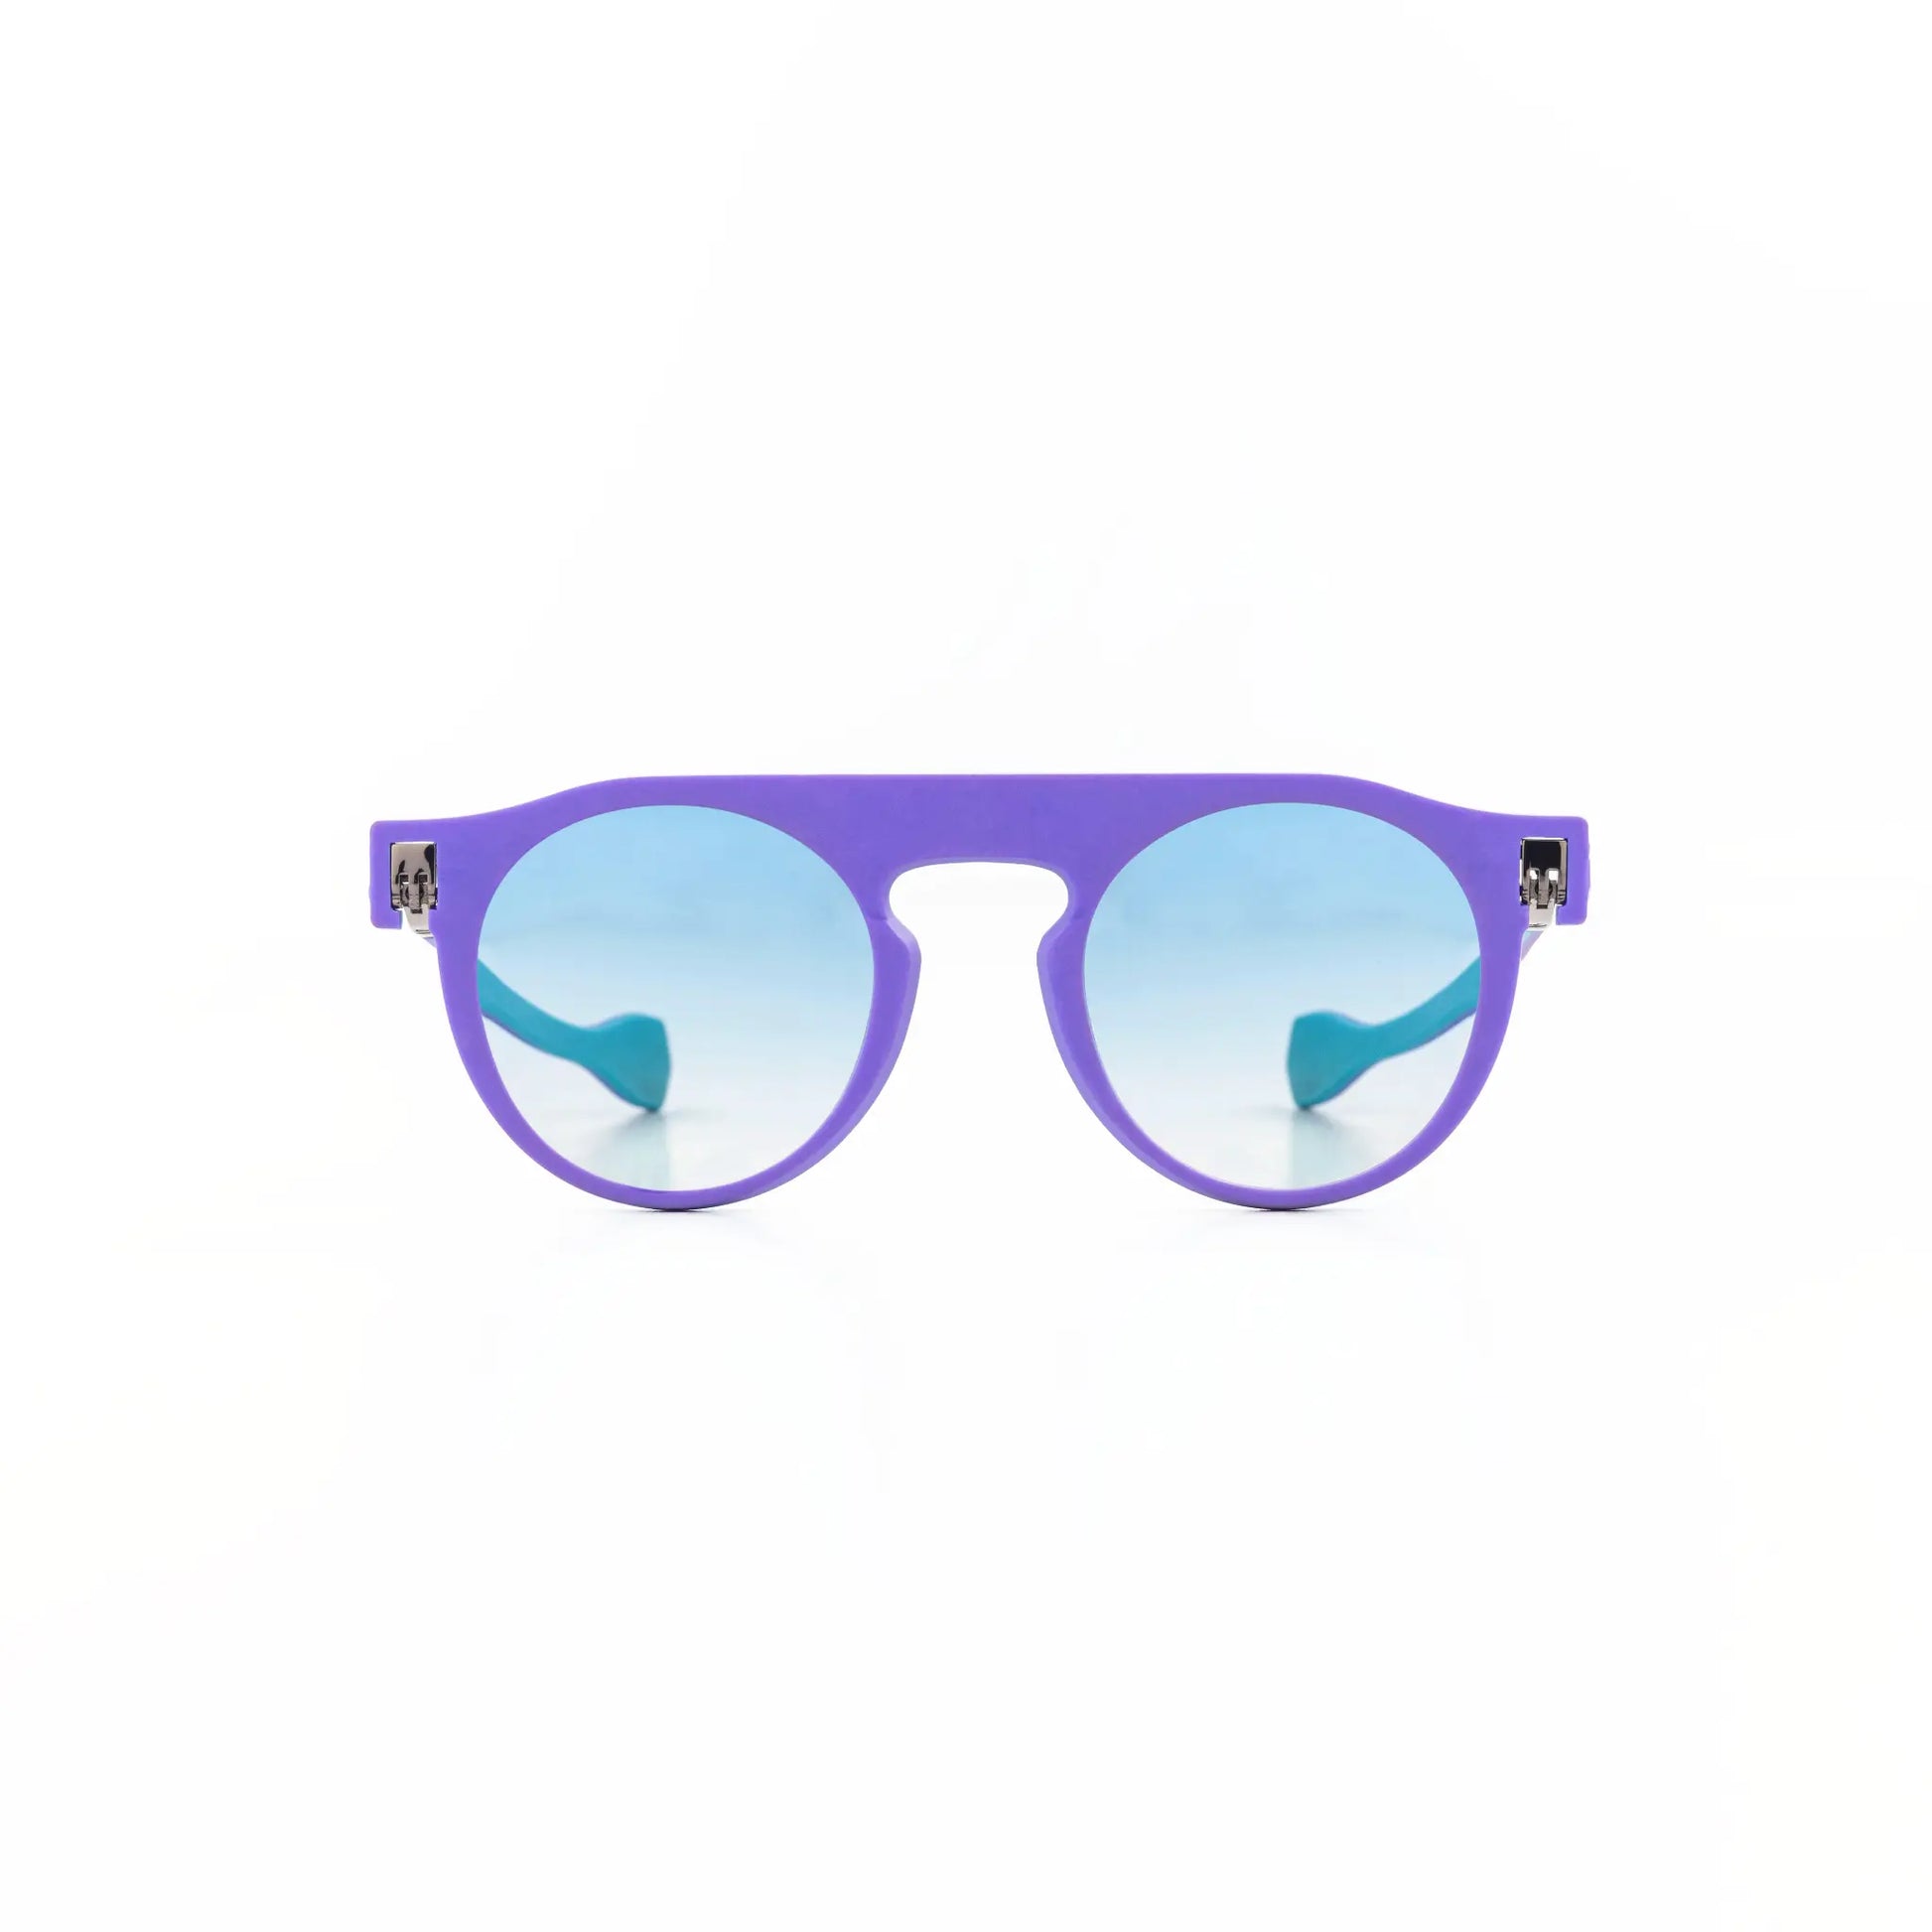 Reverso sunglasses Light Blue & purple reversible & ultra light front view 1